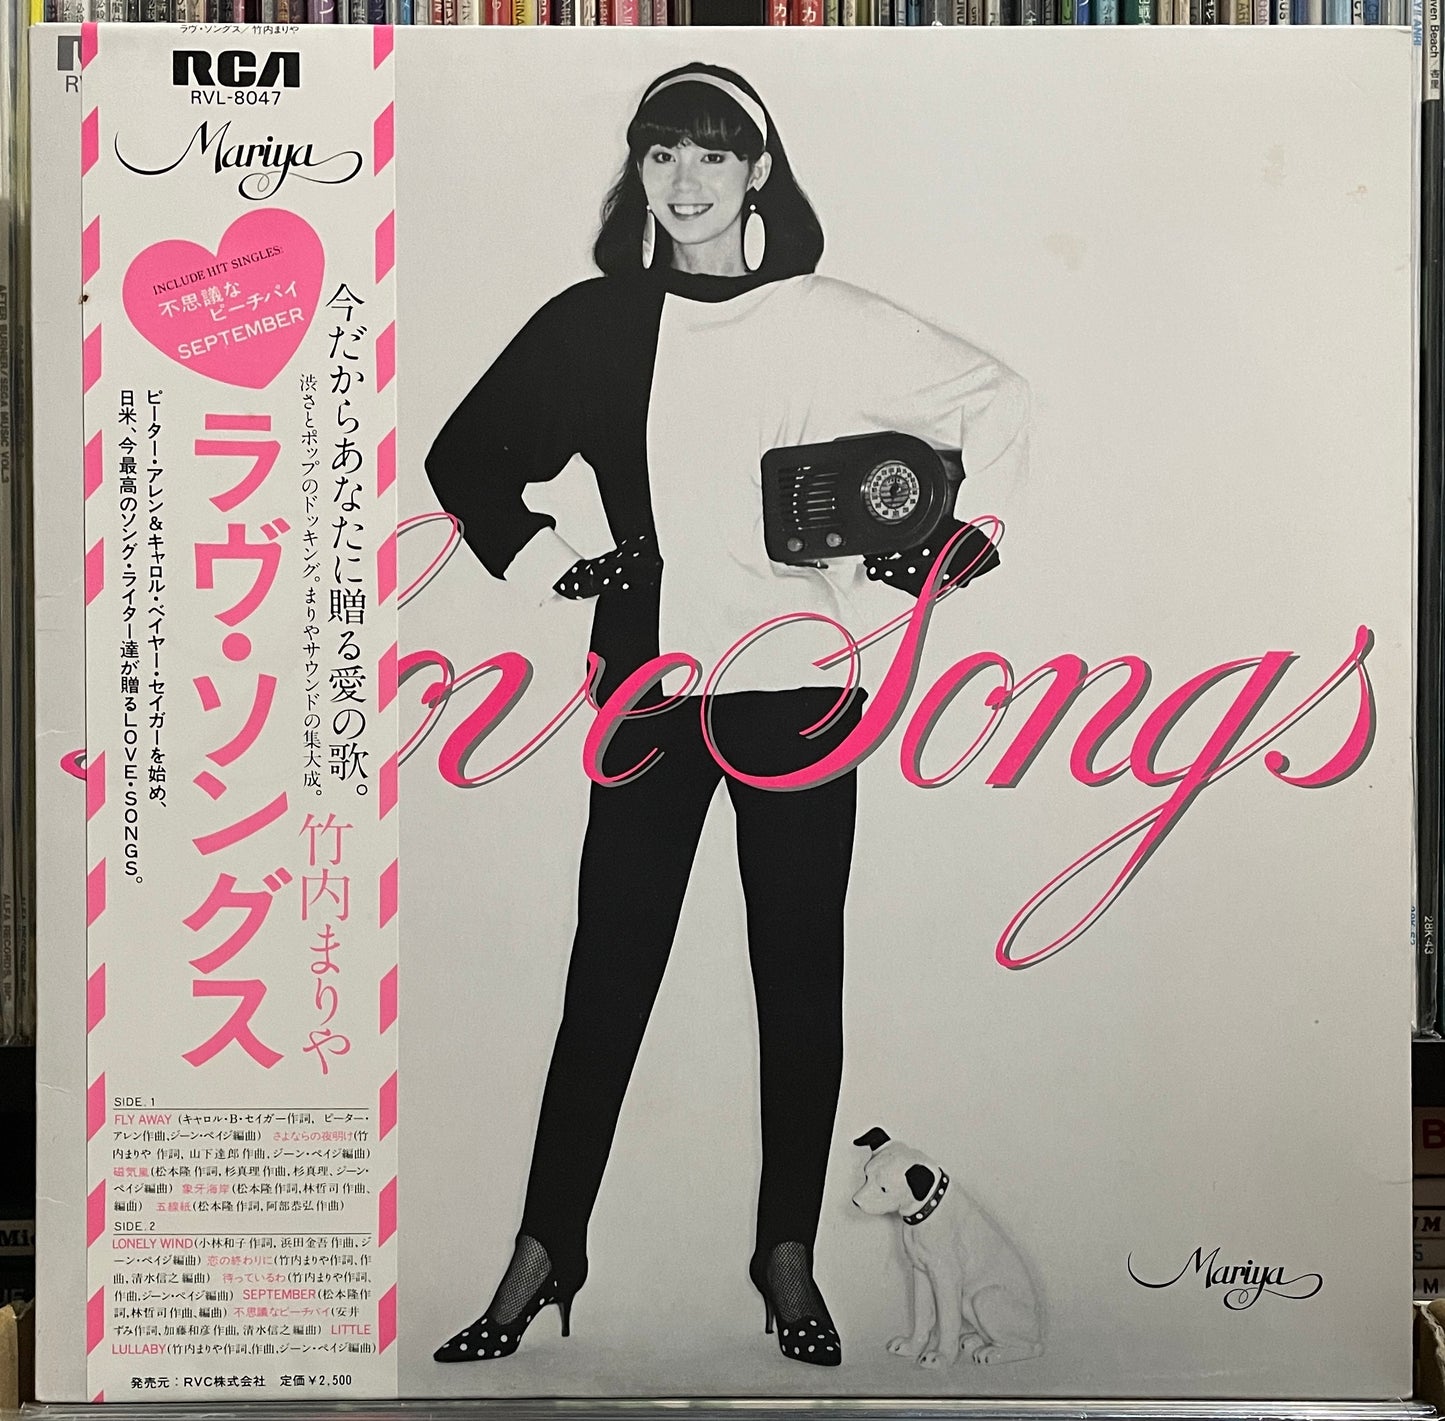 Mariya Takeuchi “Love Songs” (1980)